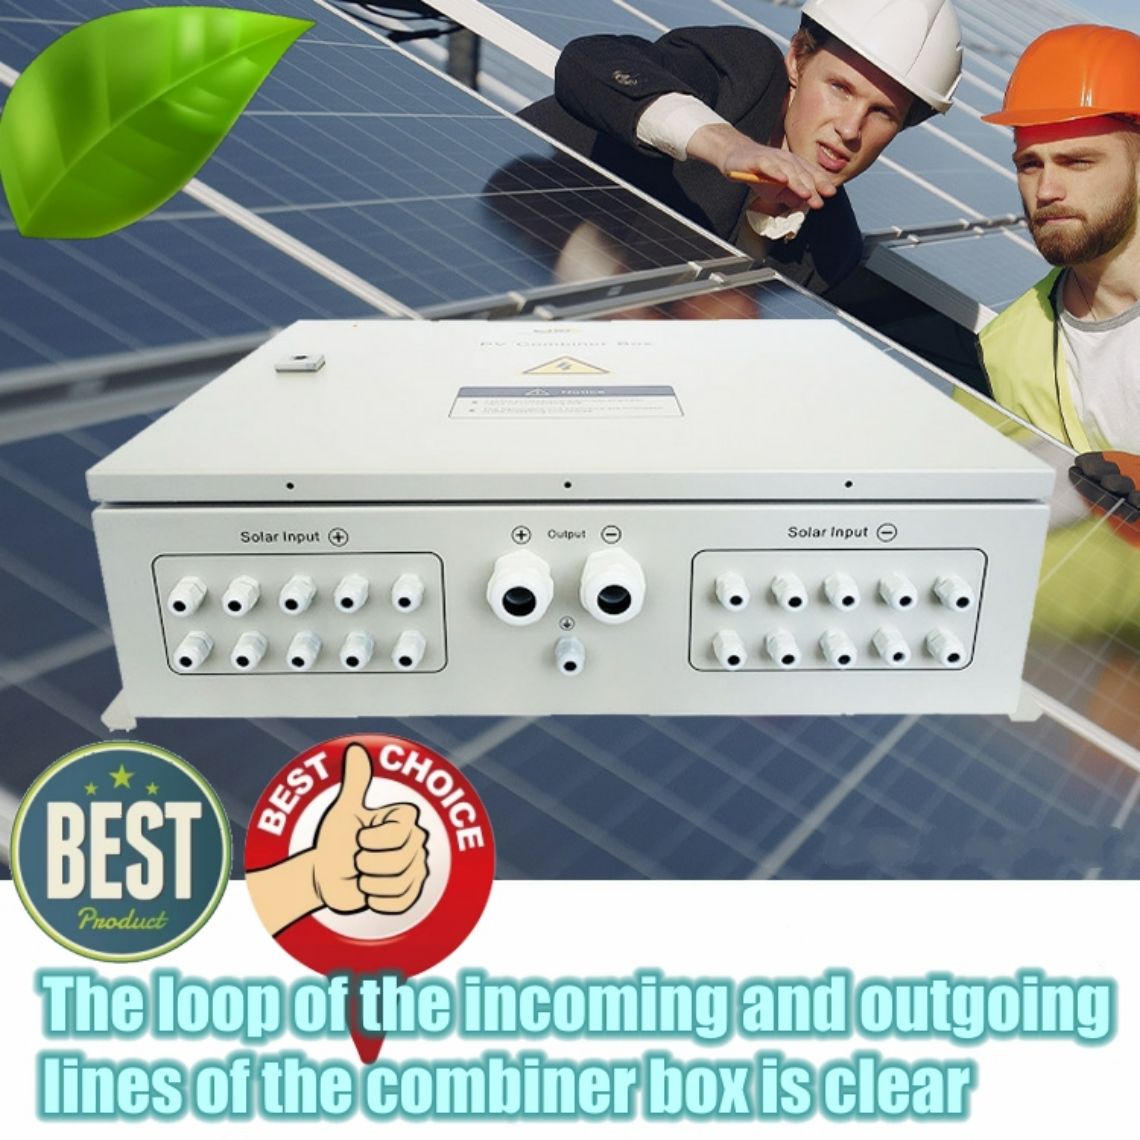 solar photovoltaic DC combiner box